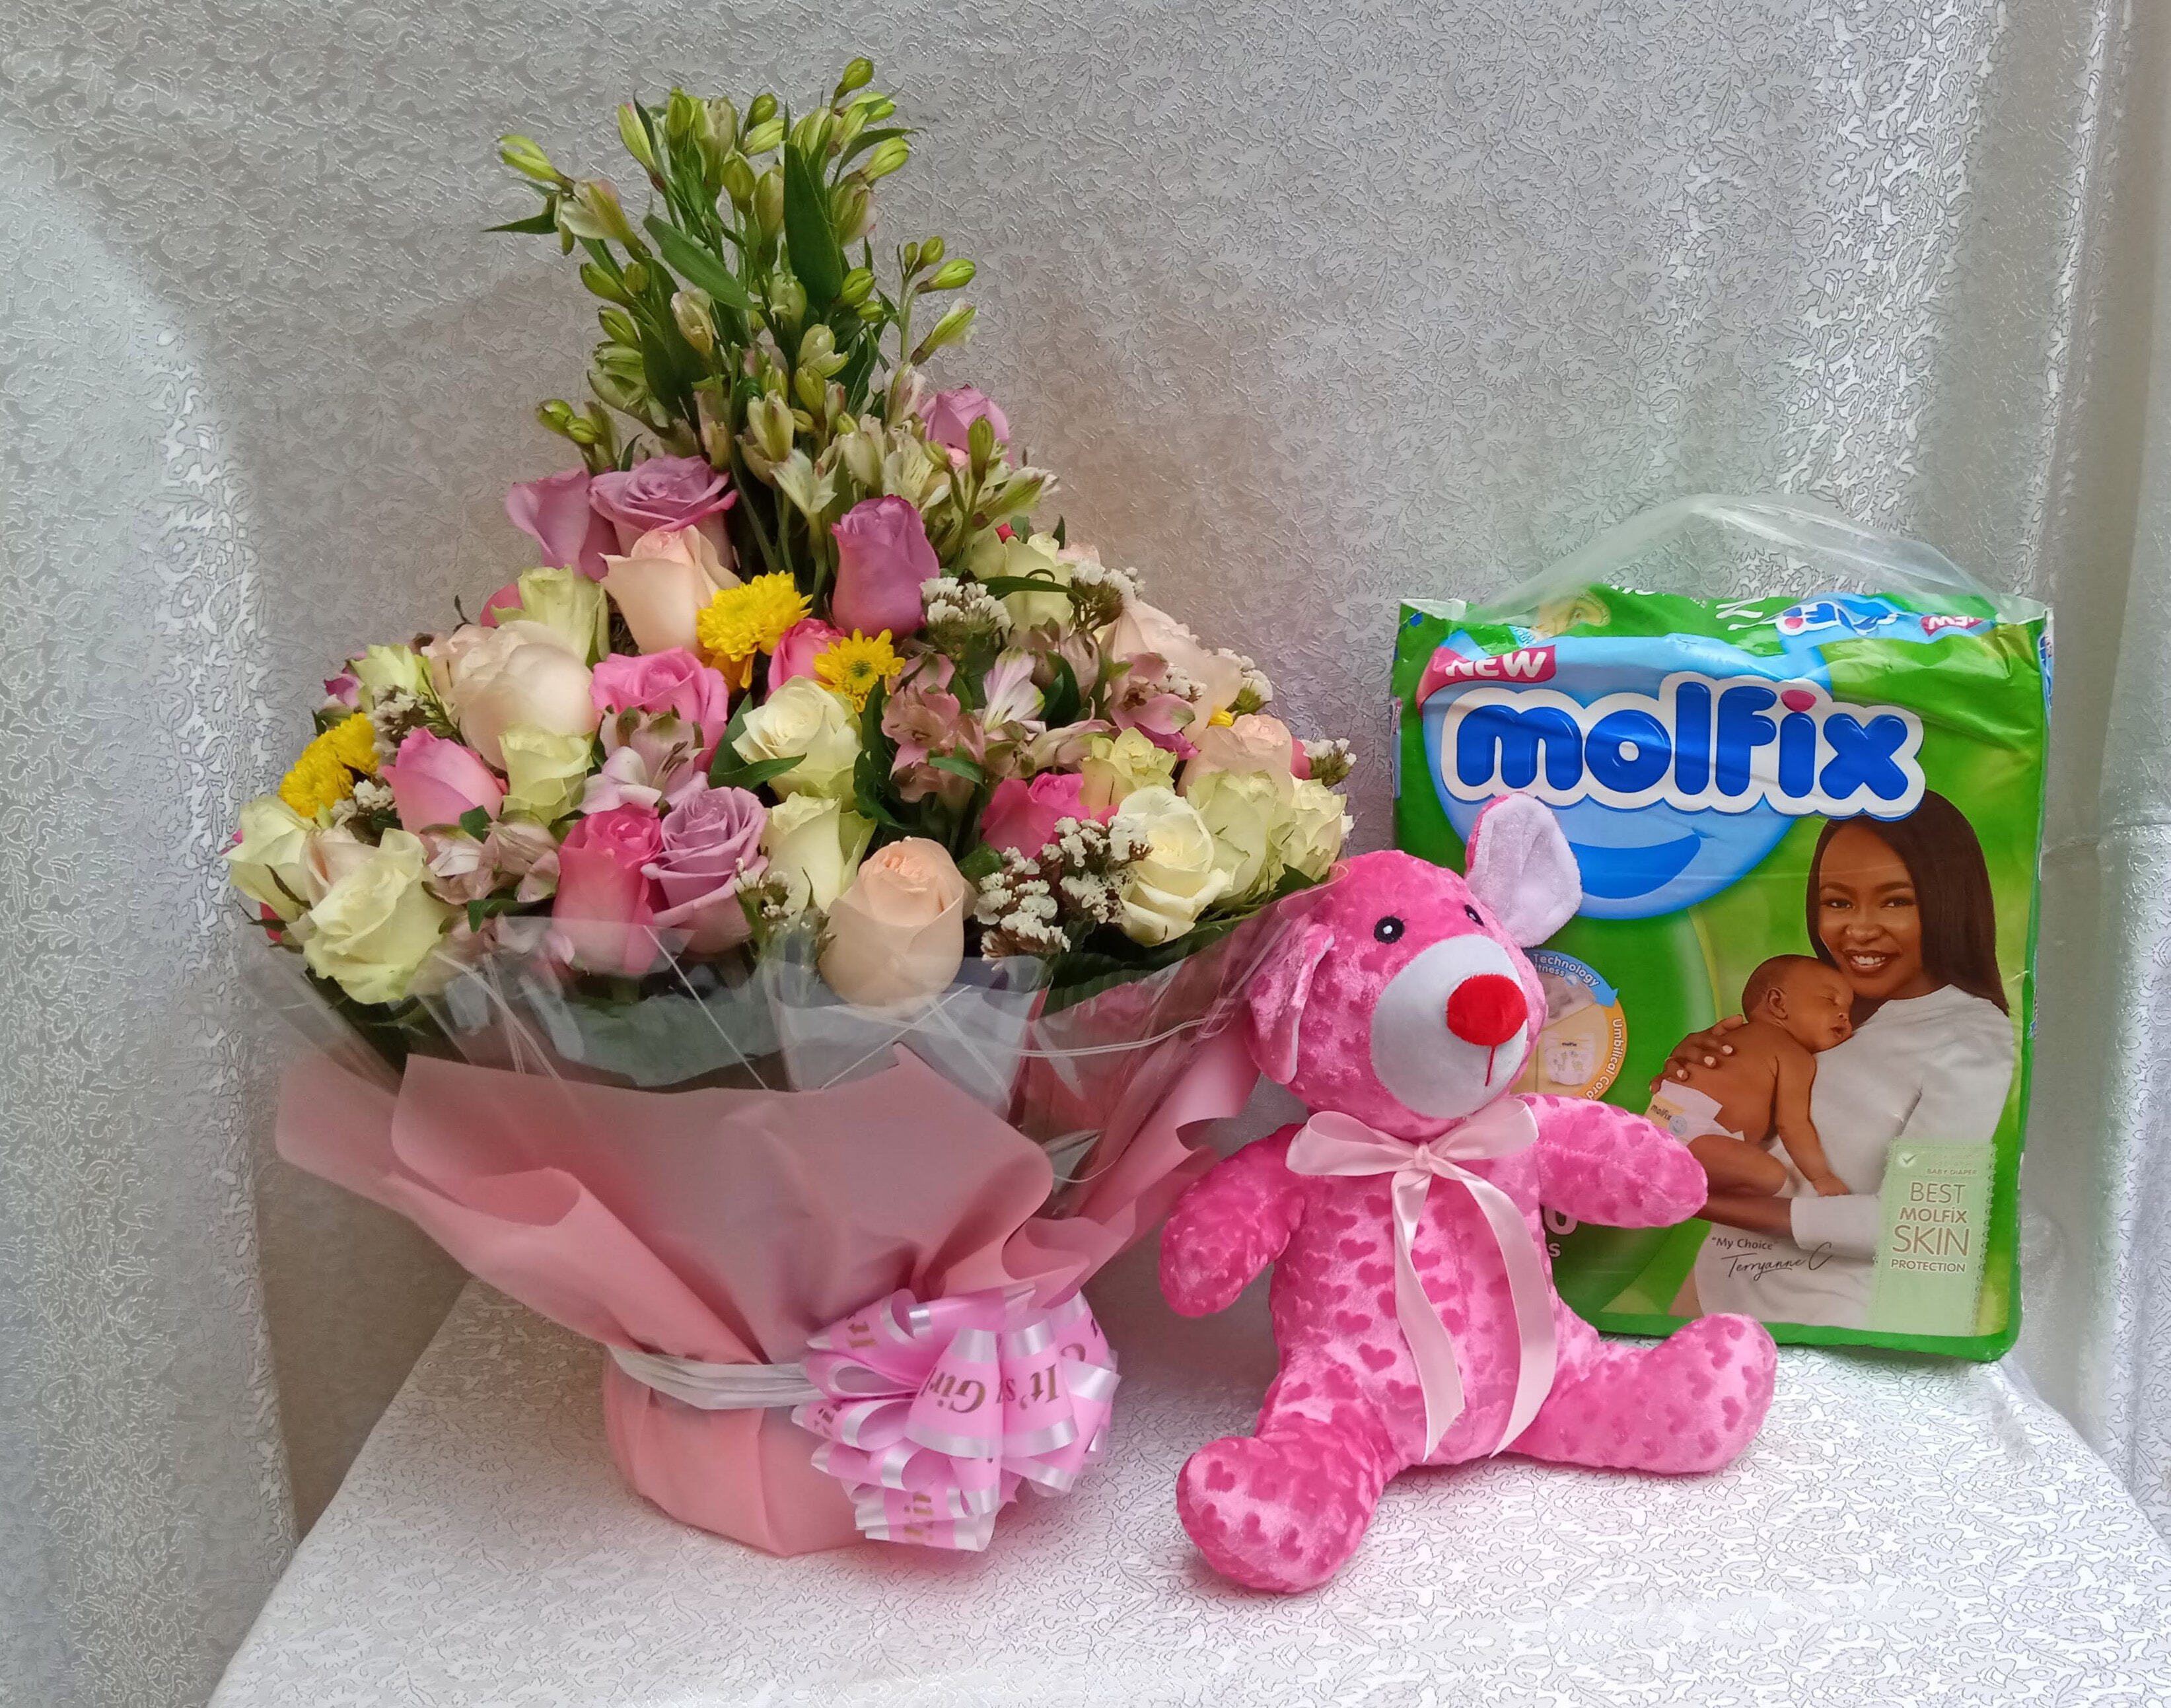 Water bouquet flower arrangement, teddy bear and diapers